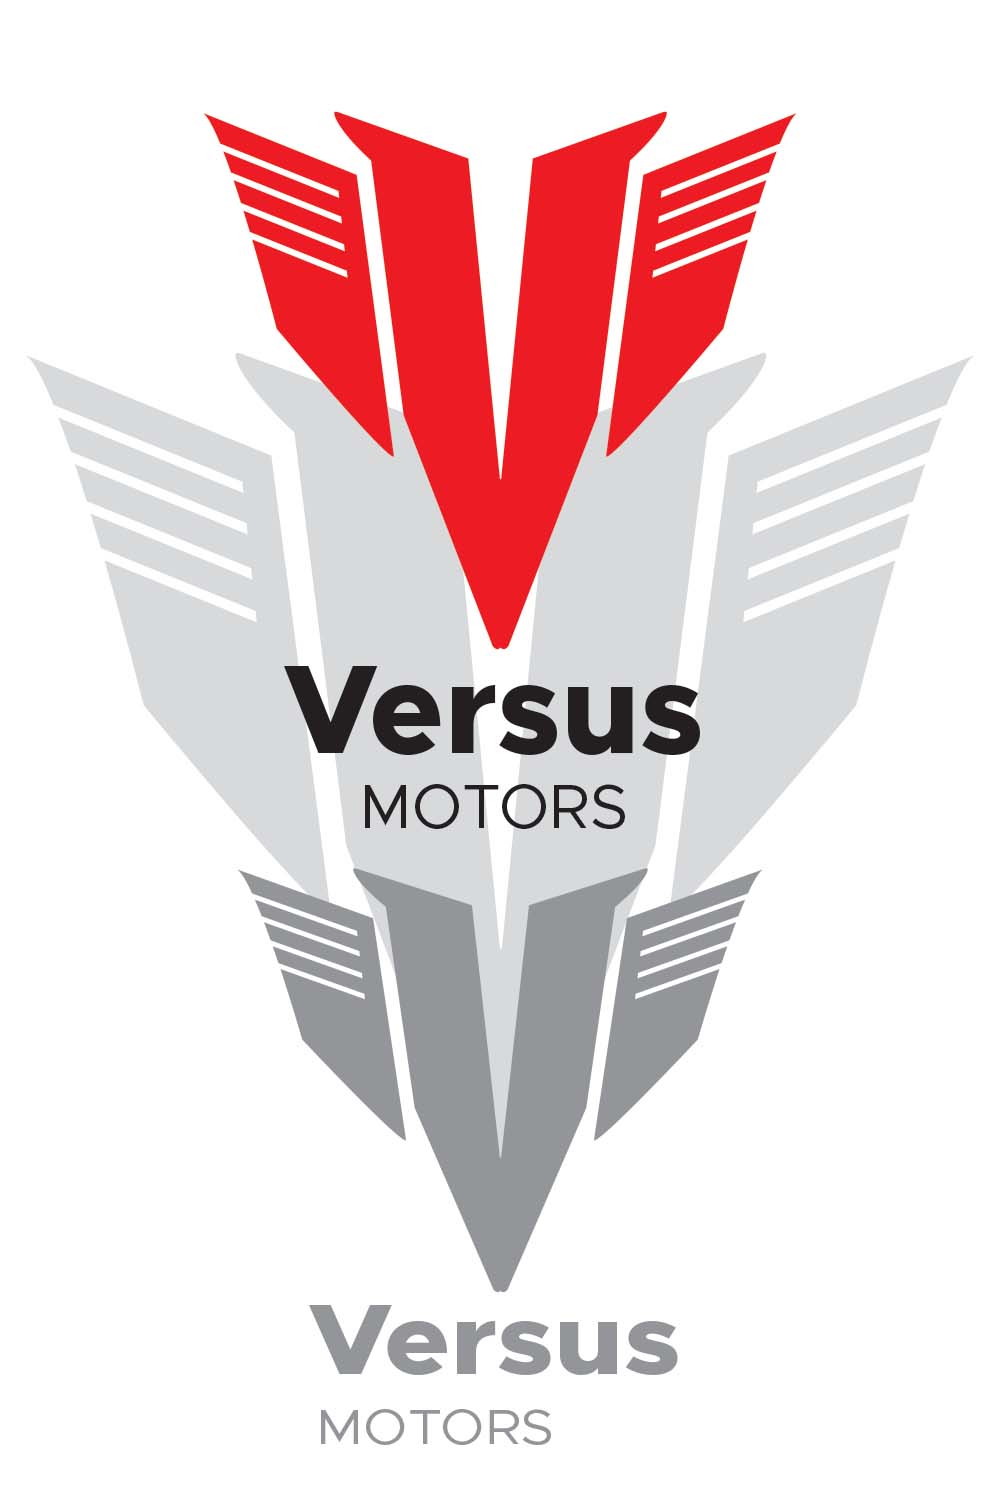 V Letter Logo Design- VERSUS MOTORS LOGO TEMPLATE pinterest preview image.